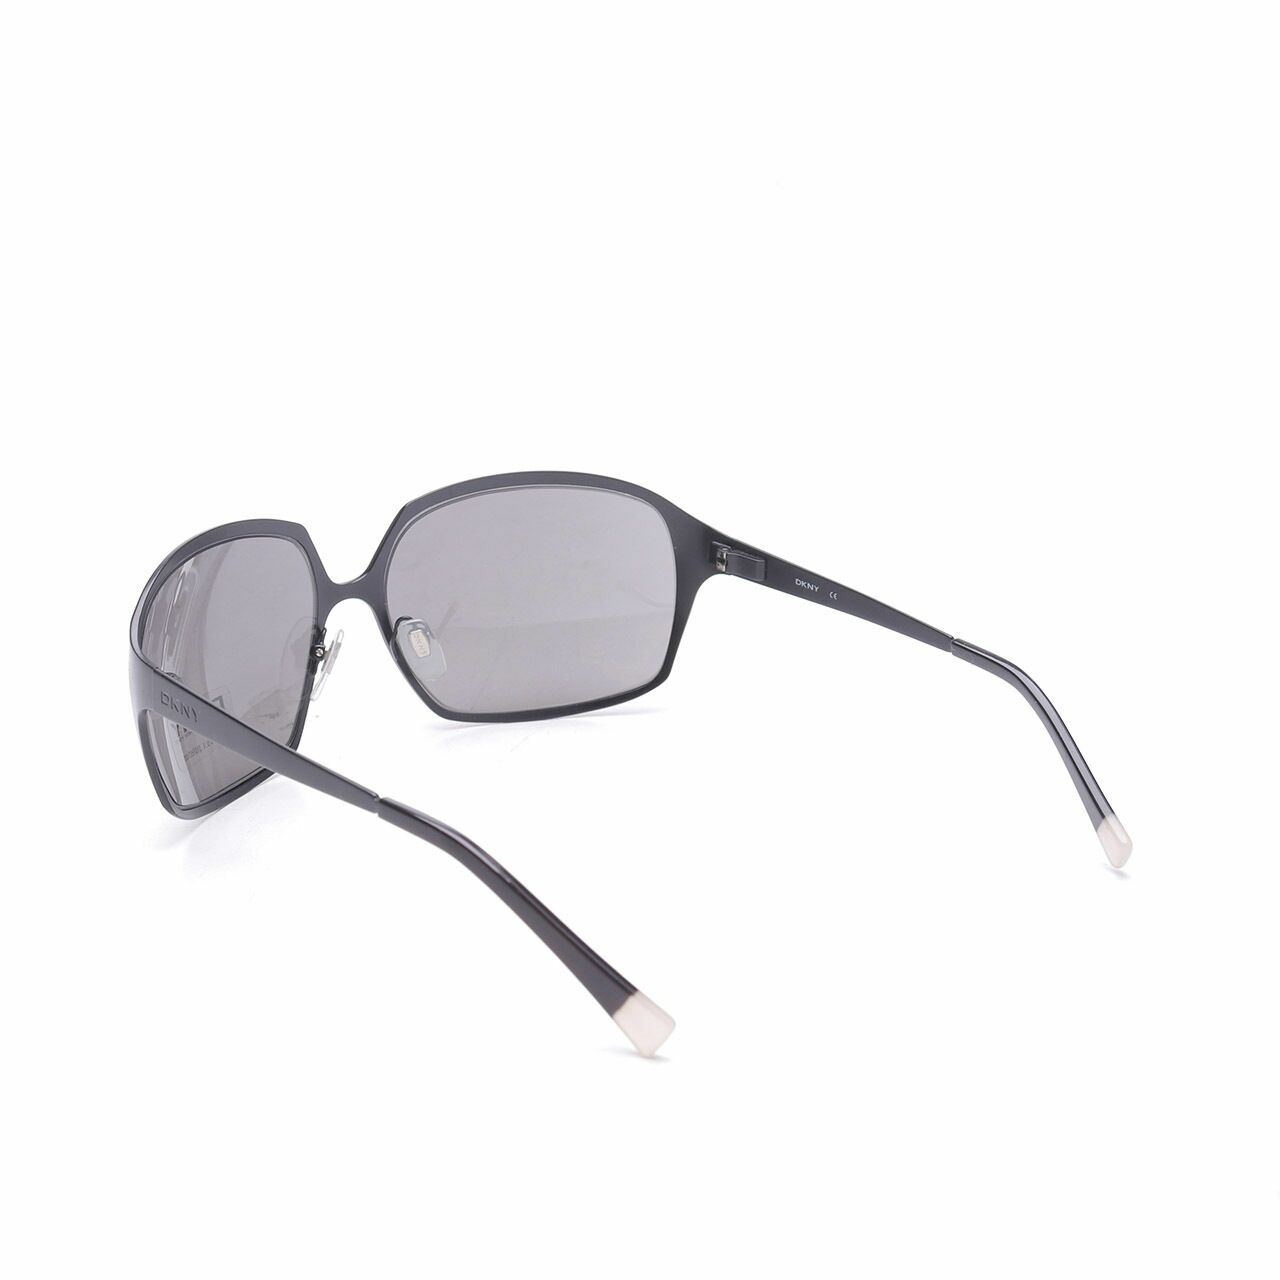 DKNY Black 5021 Sunglasses